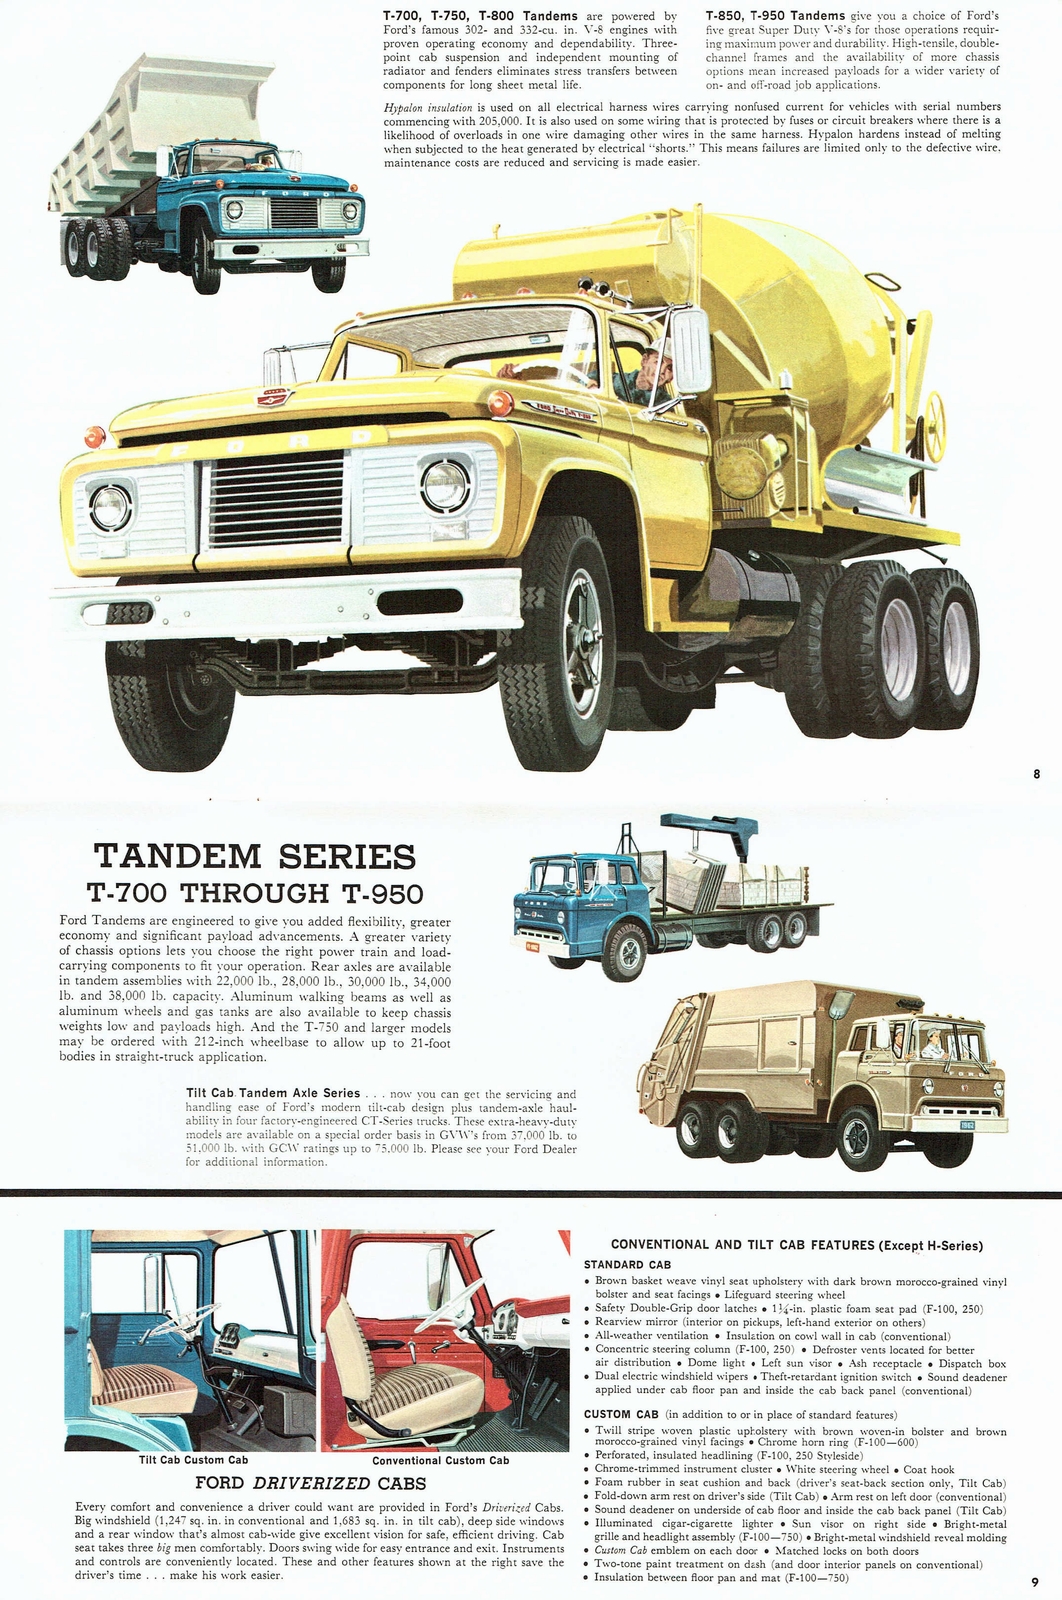 n_1962 Ford Truck Line-08-09.jpg